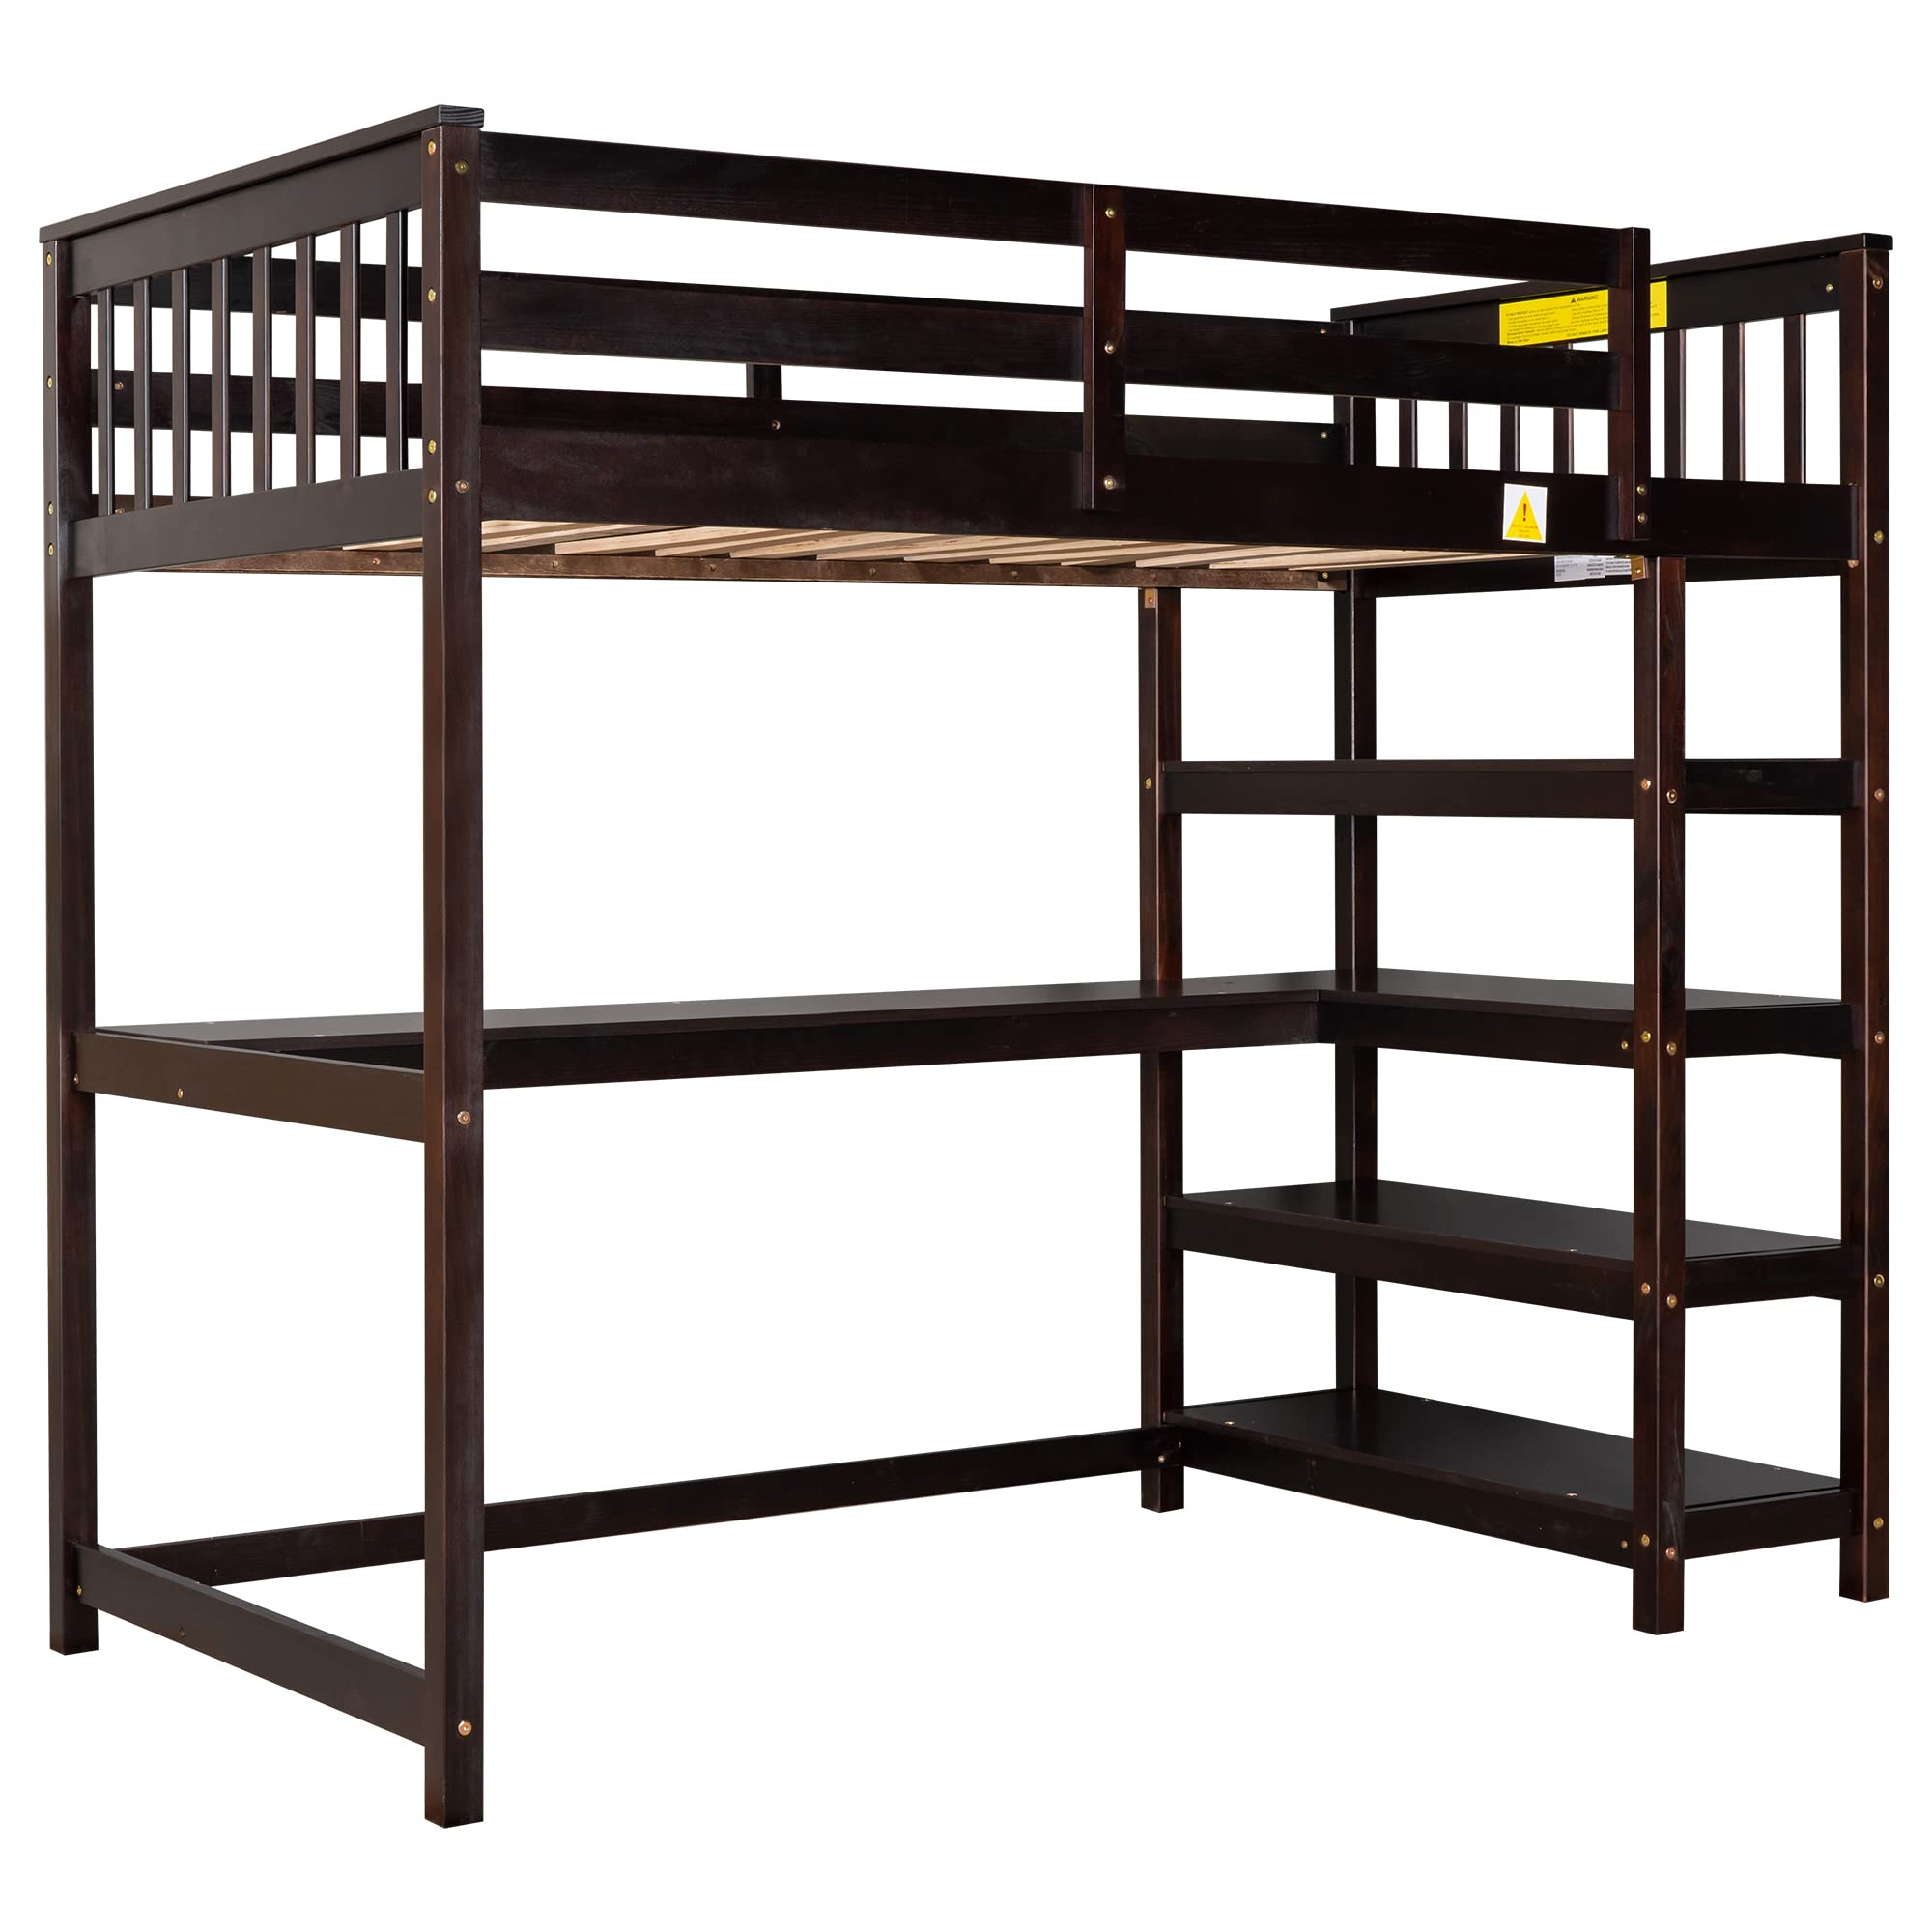 Merax Wood Loft Bed with Desk and Shelves : Twin Size Loft Bed with Storage Shelves and Under-Bed Desk, Twin Loft Bed,Espresso